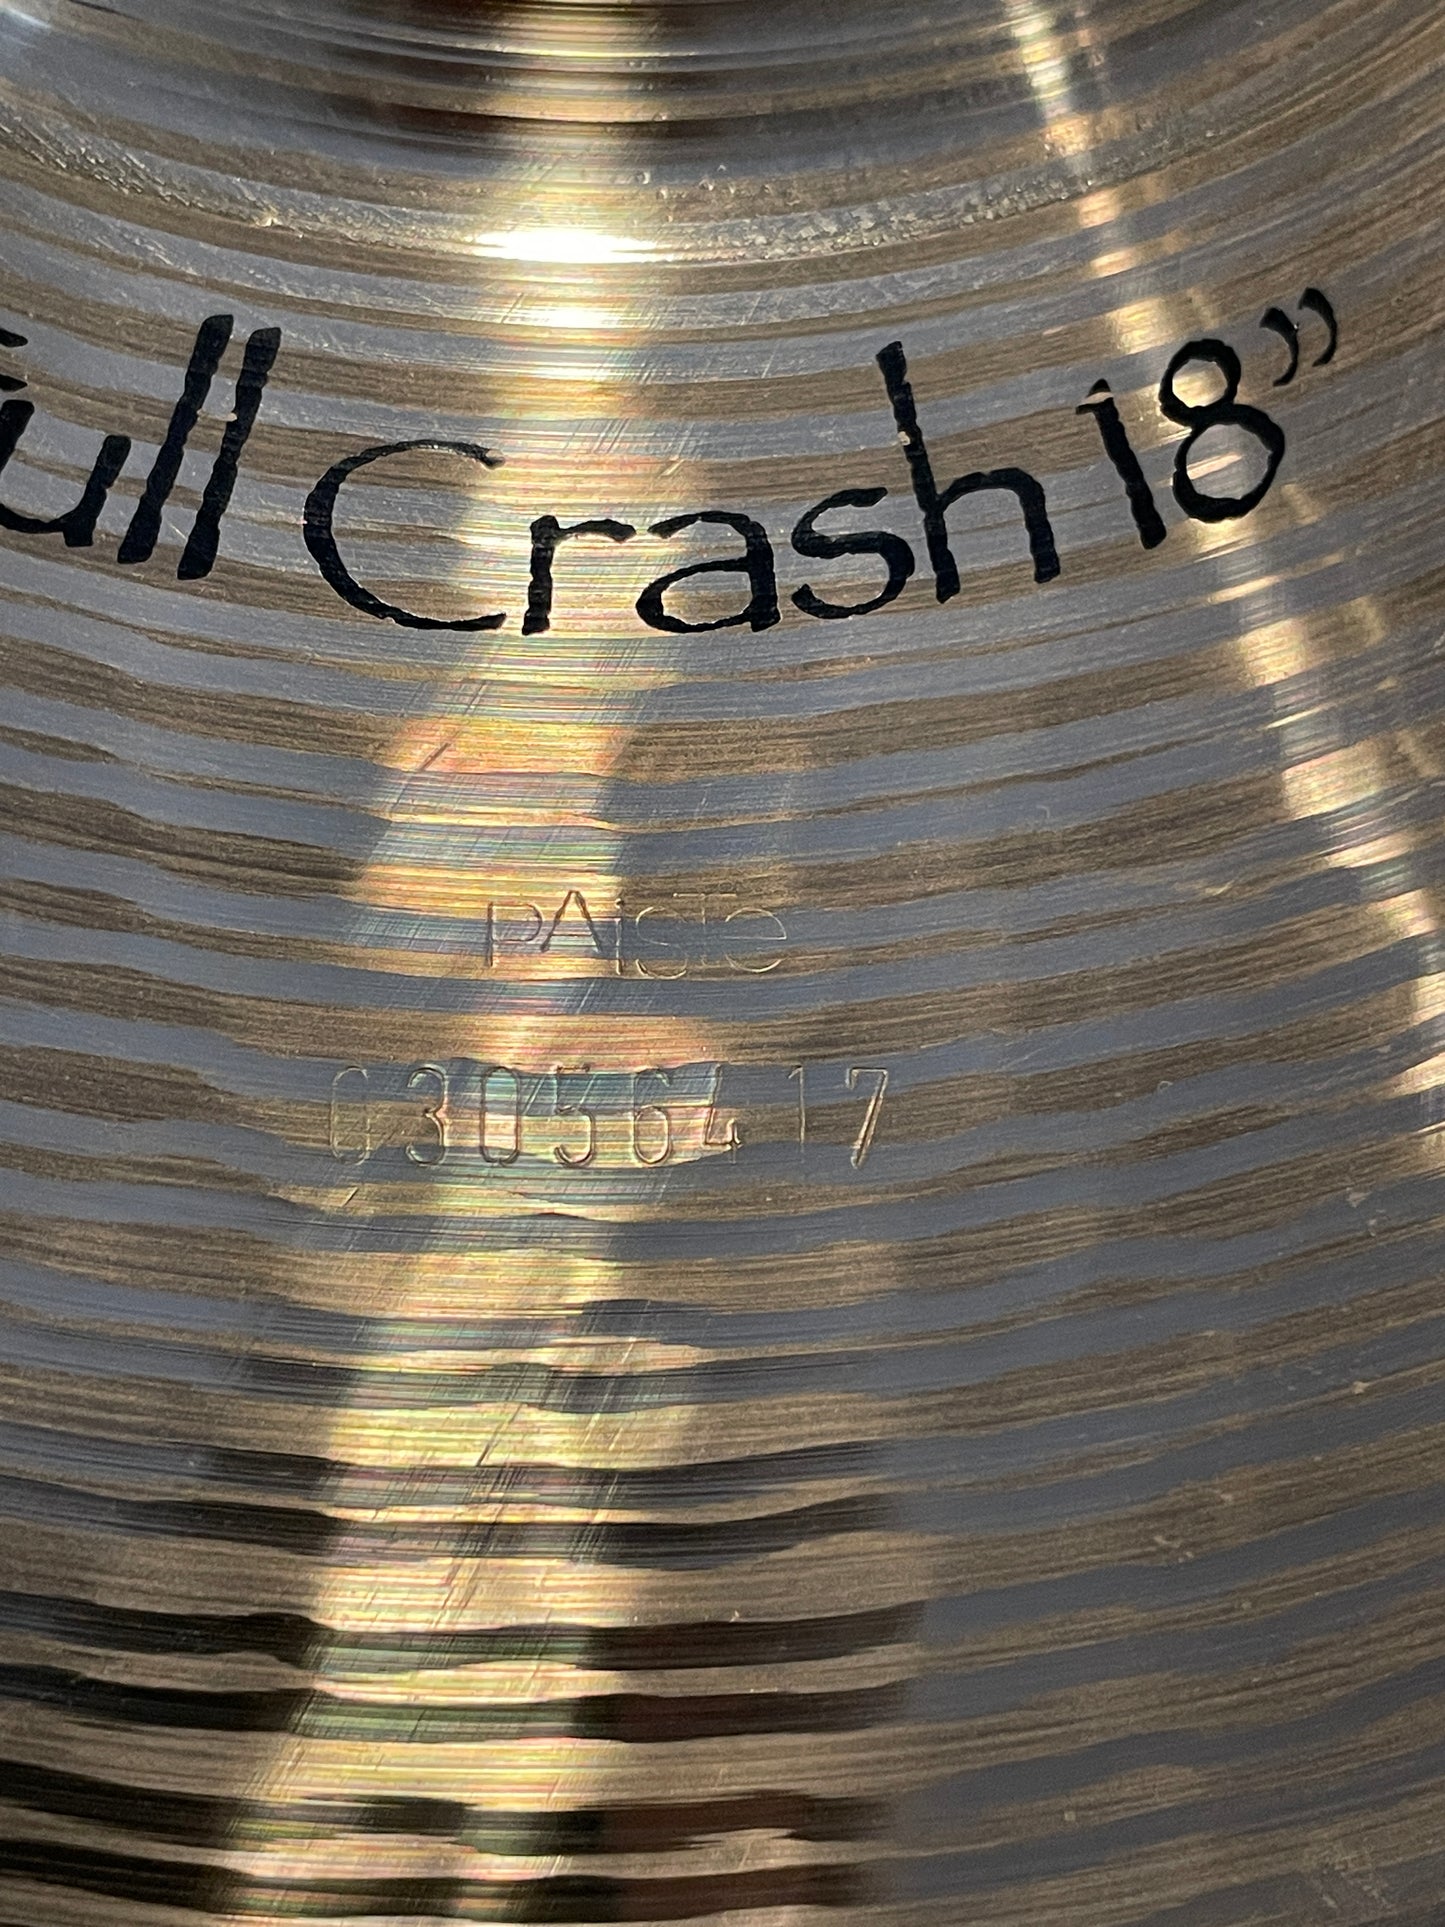 18" Paiste Signature Full Crash Cymbal 1460g